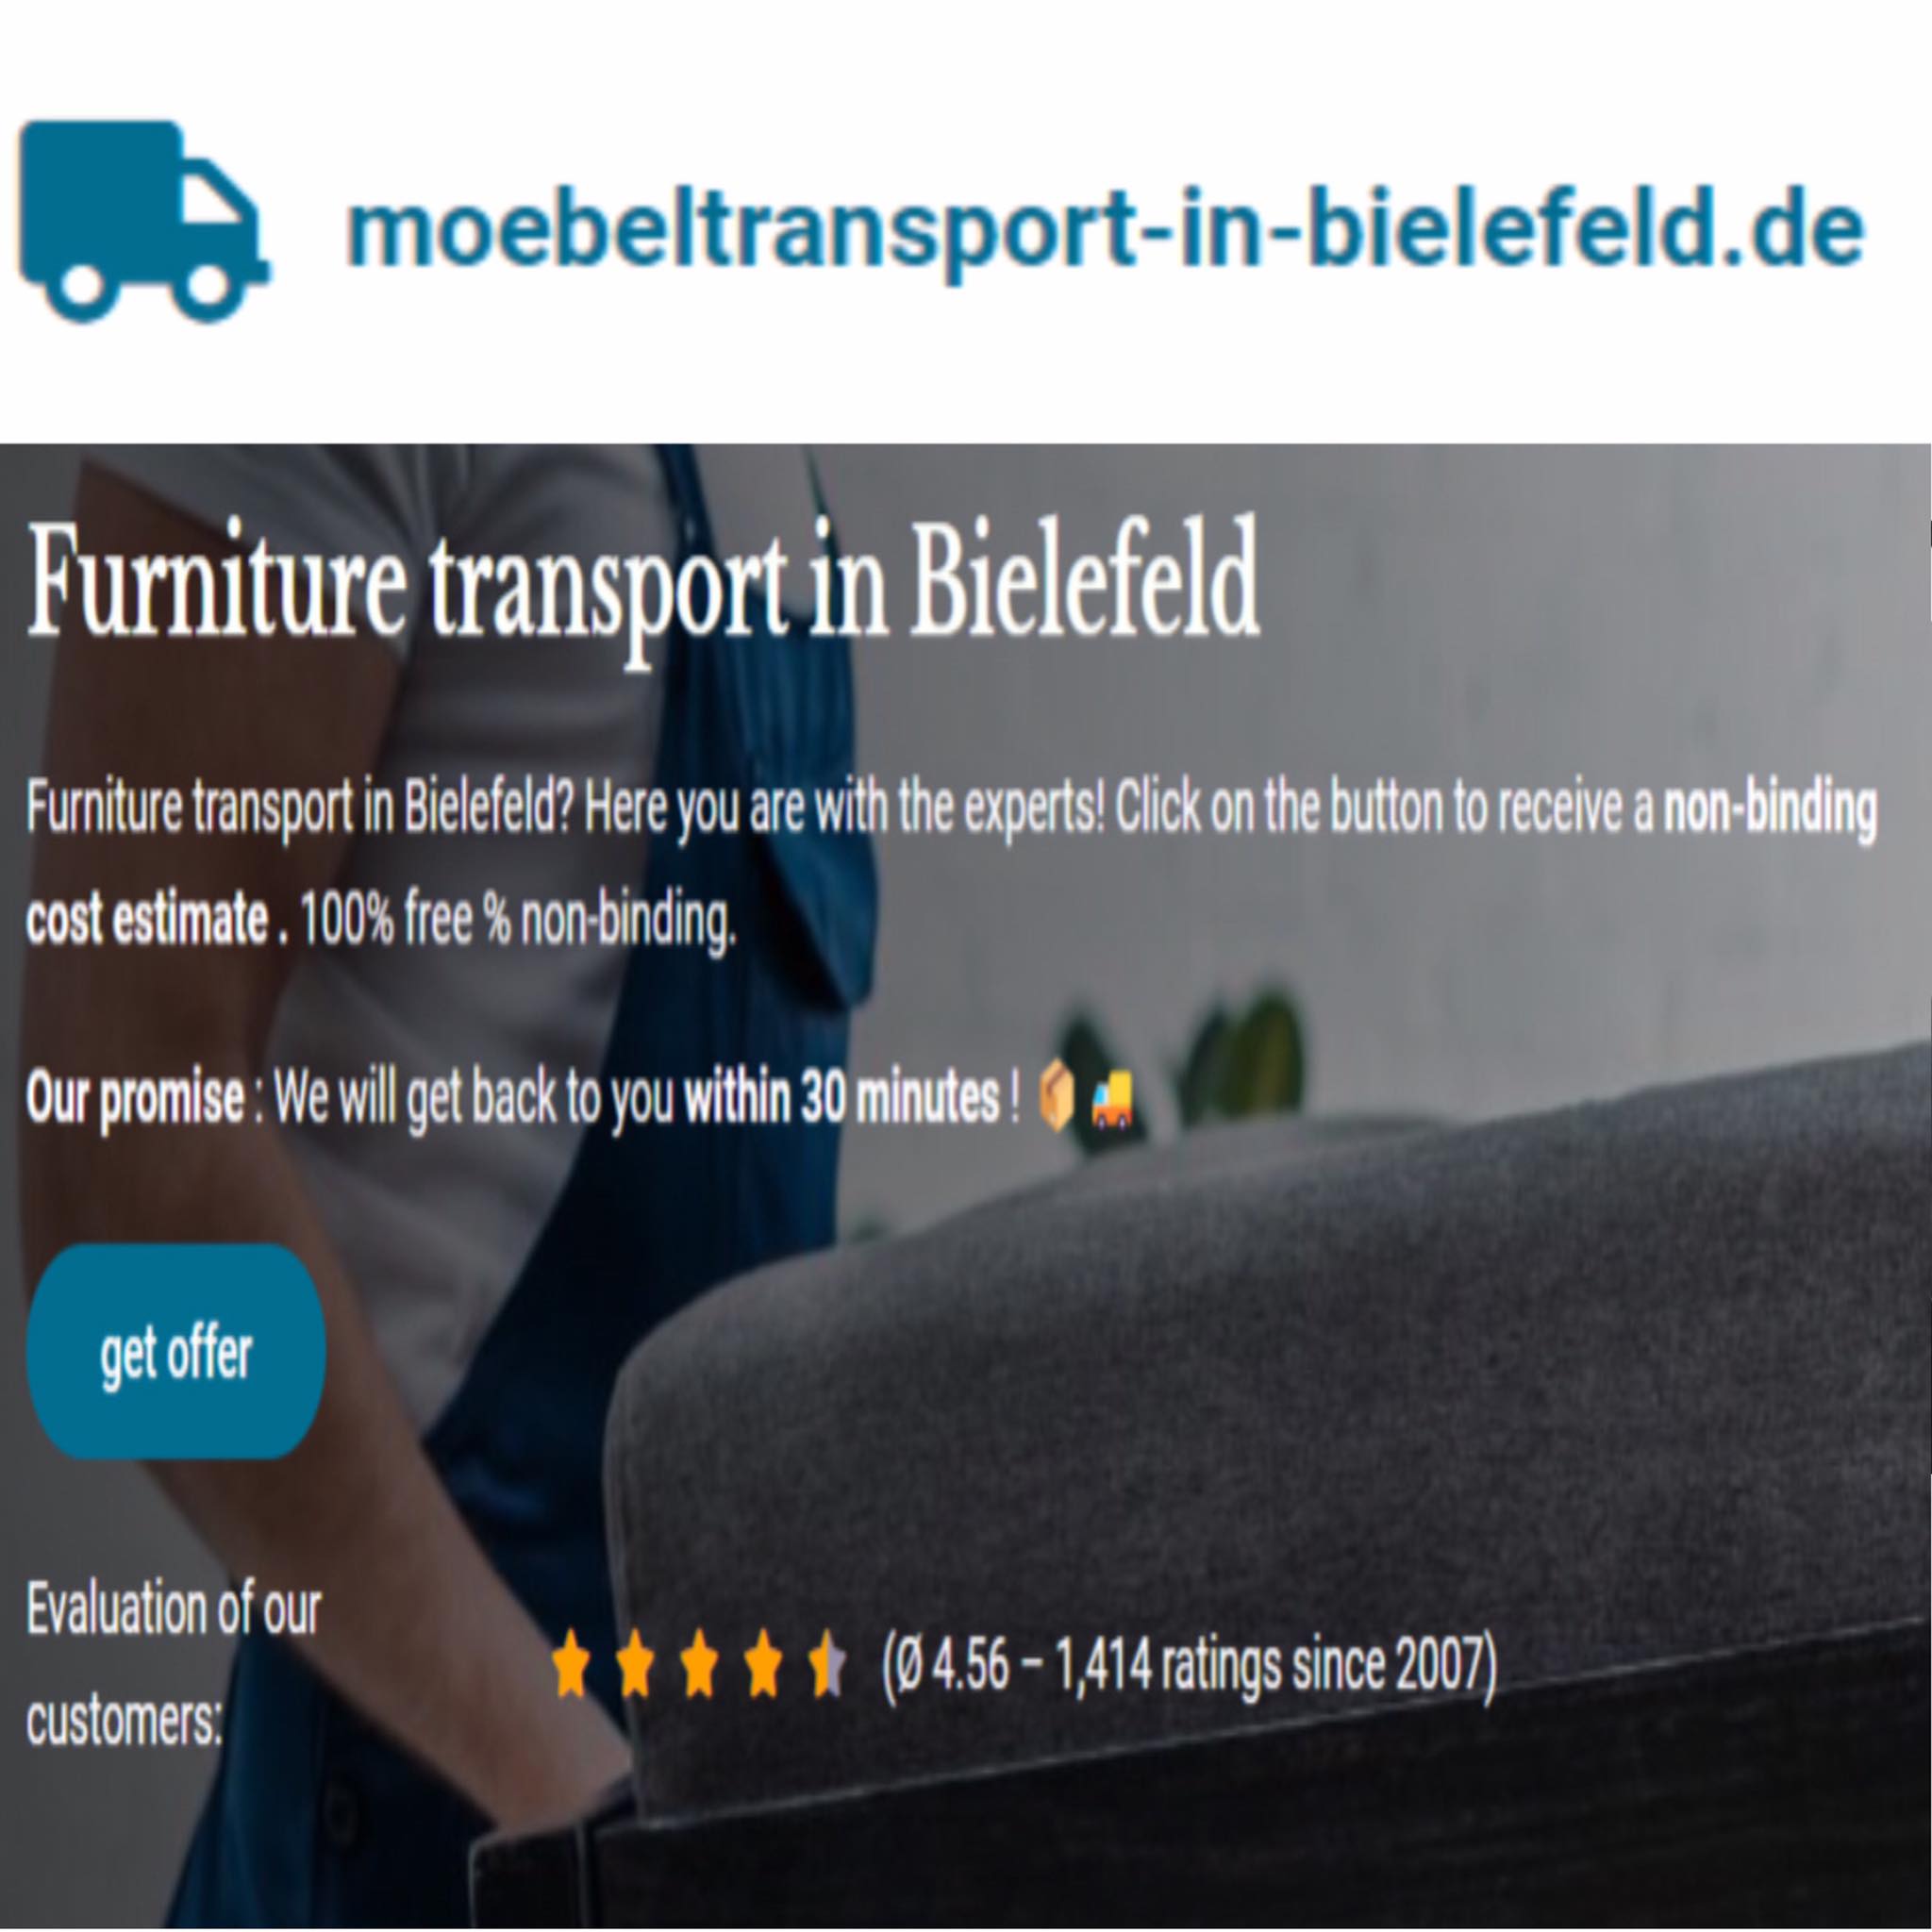 moebeltransport-in-bielefeld.de